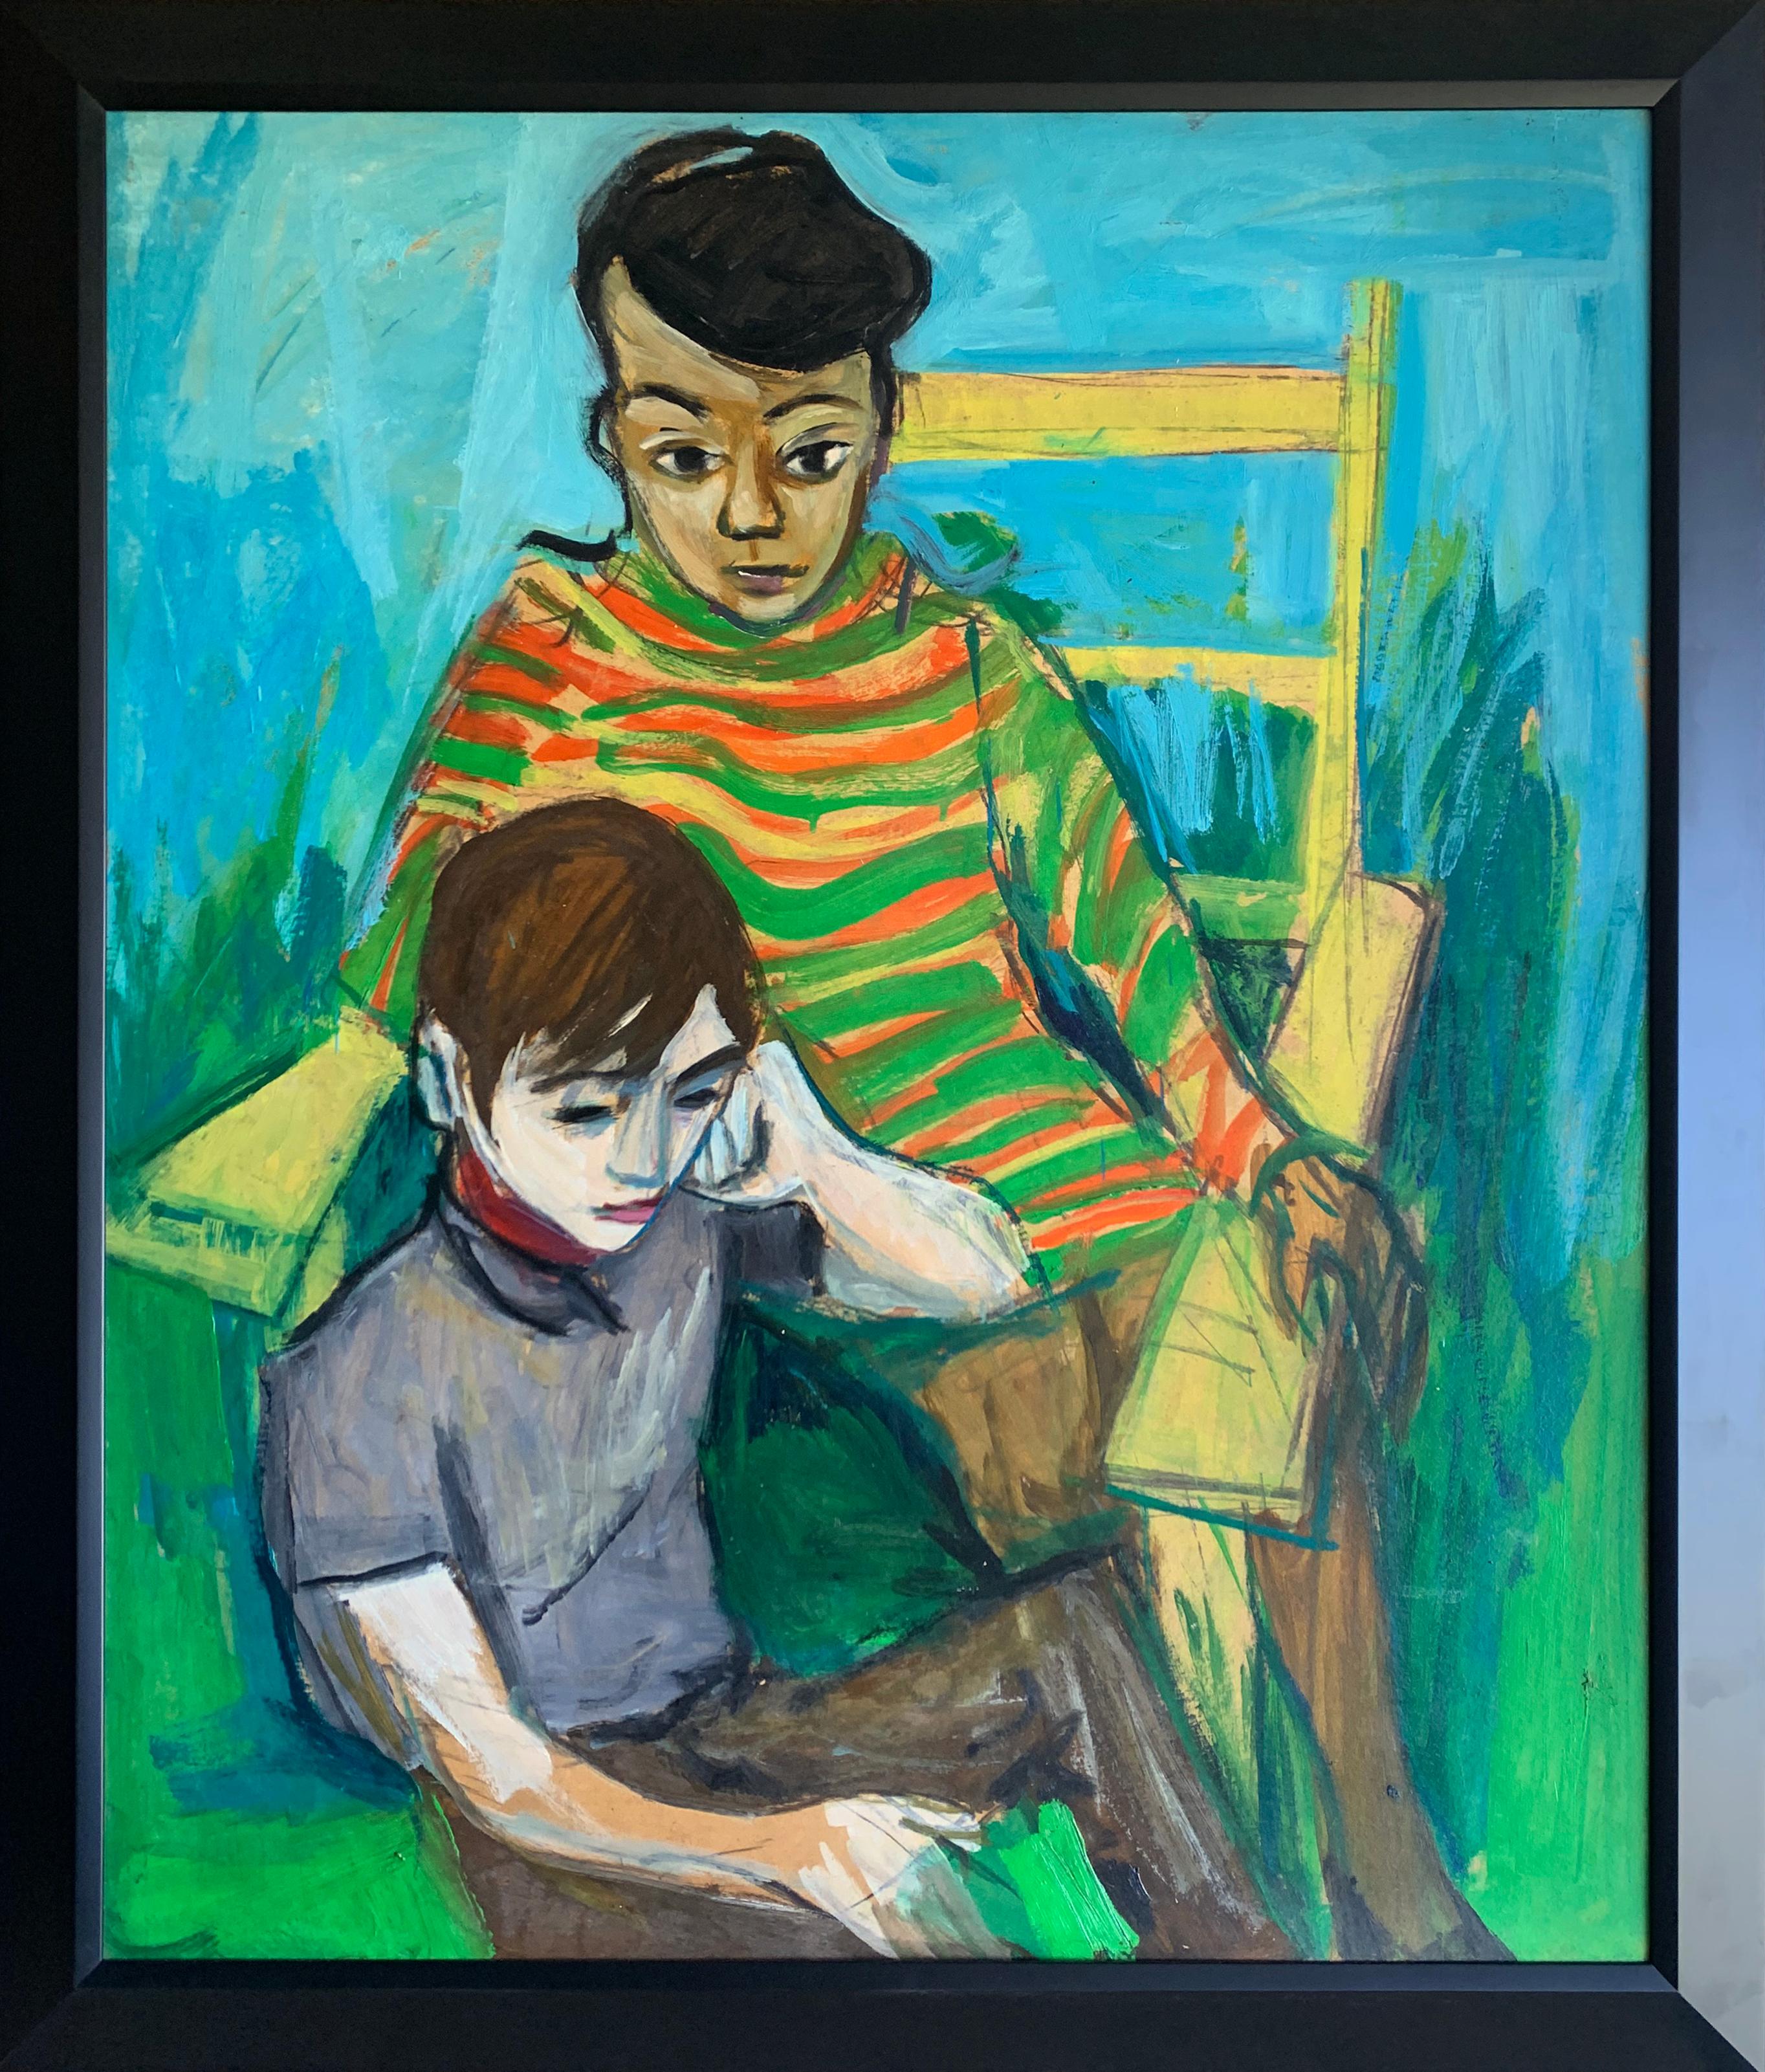 Striped Dress and Boy, Expressionist Portrait by Philadelphia Artist - Painting by Bernard Harmon